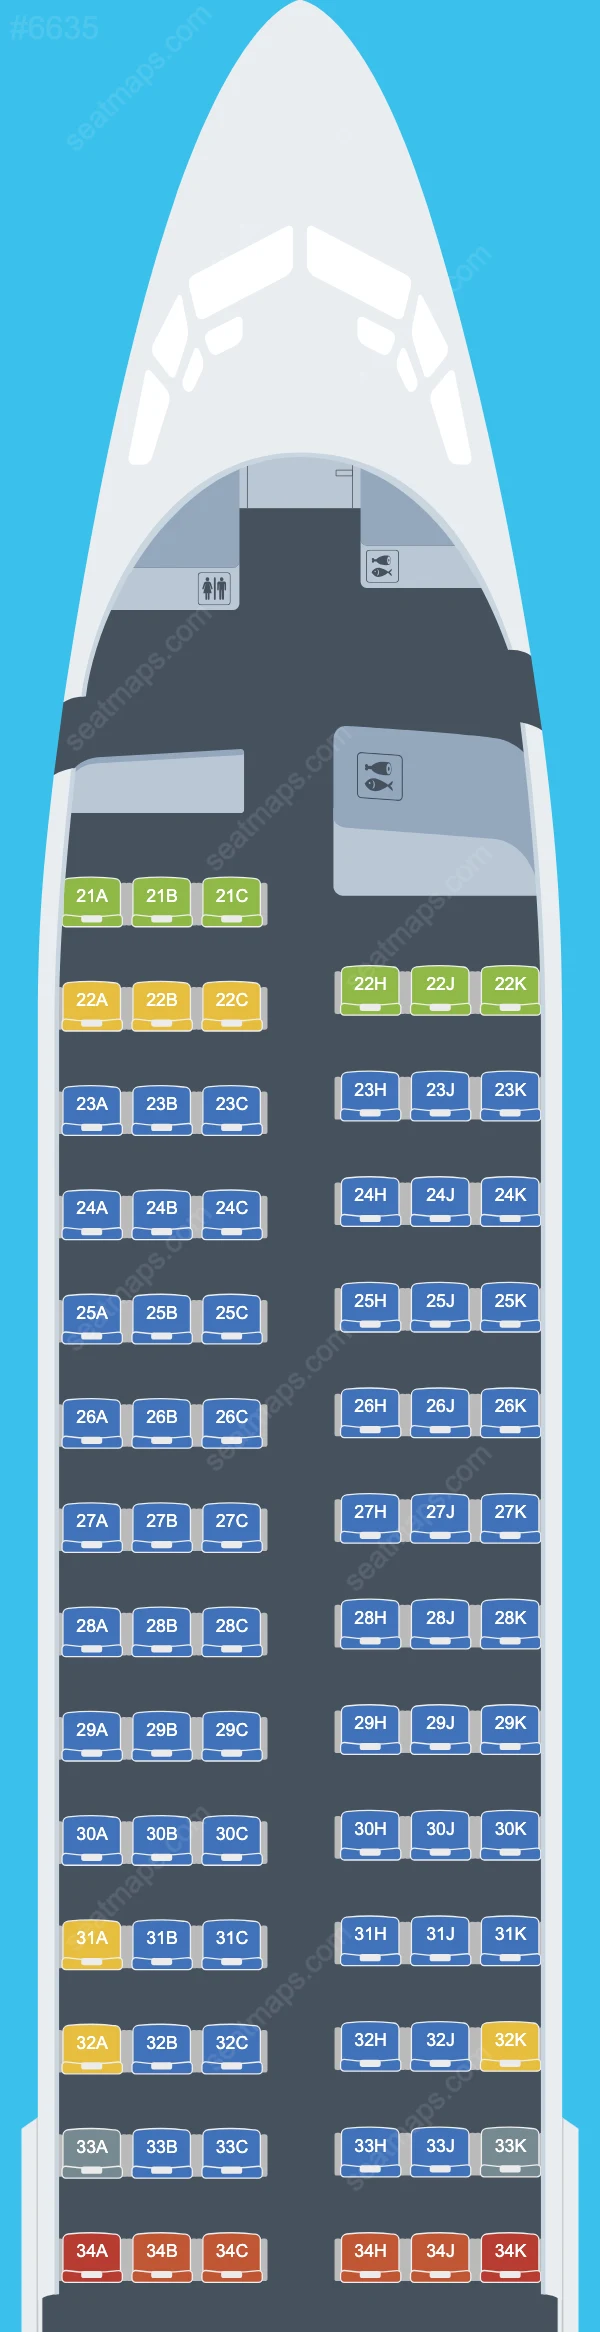 El Al мапа салону Boeing 737-800 737-800 V.2